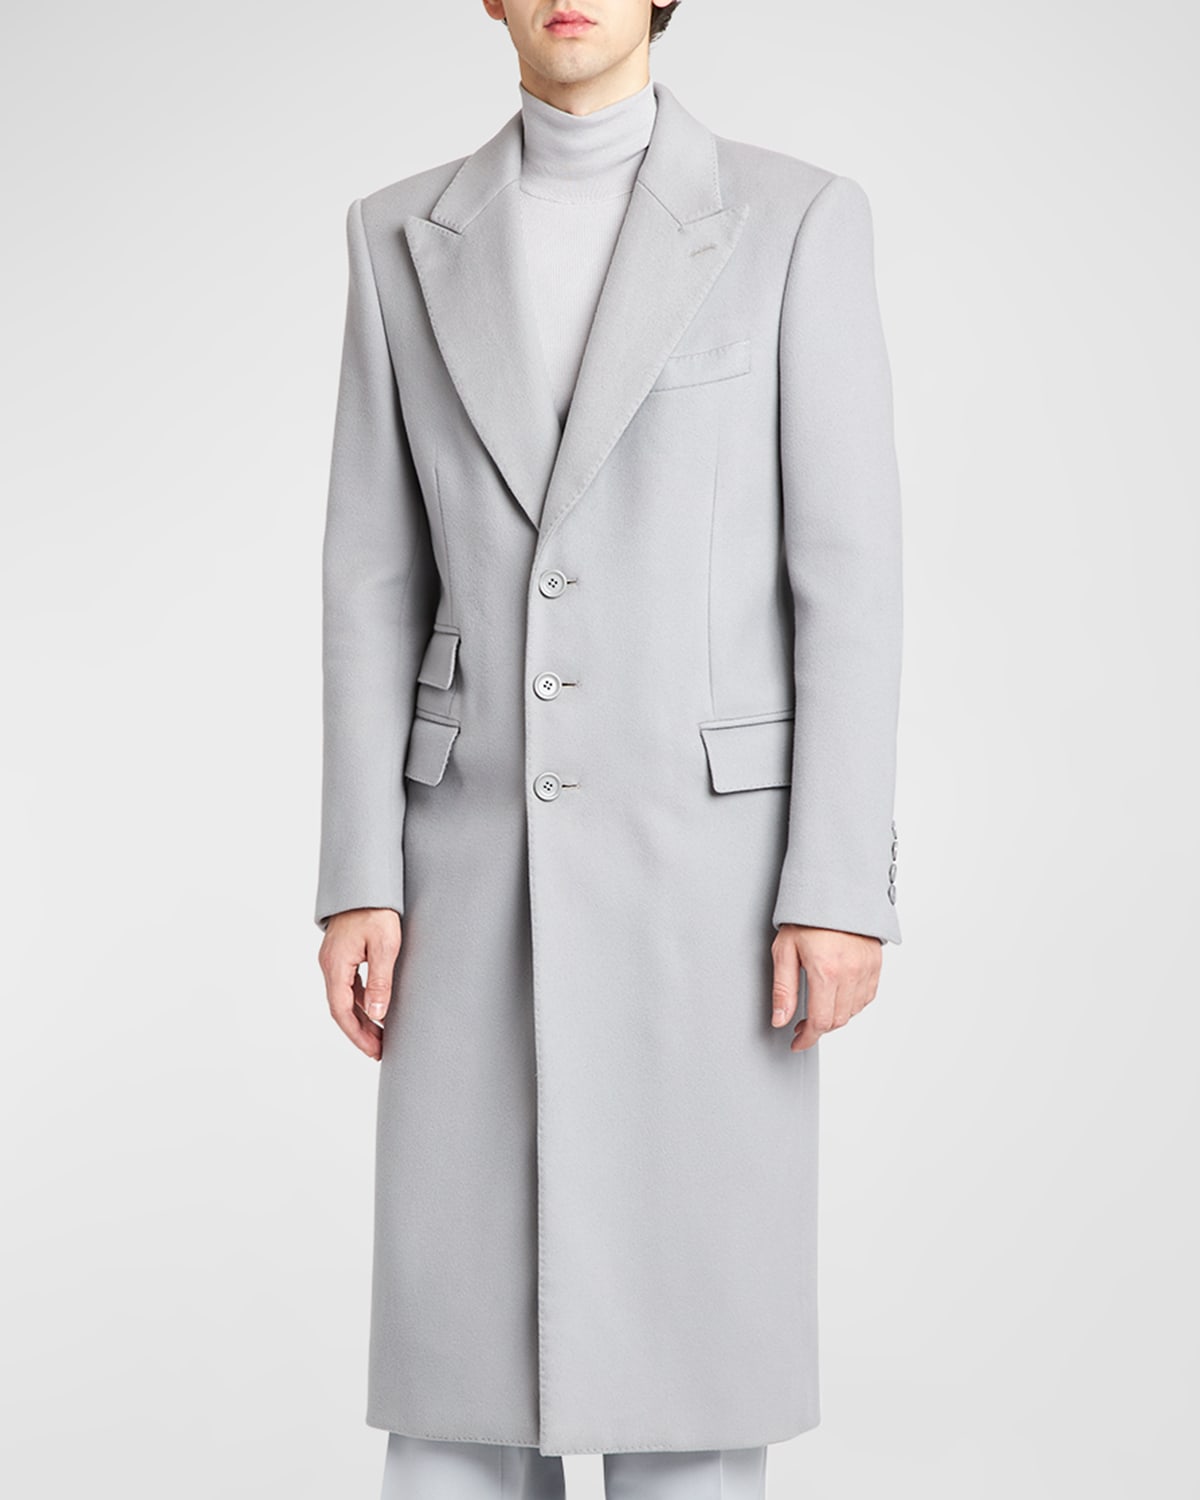 Men's Solid Cashmere Topcoat